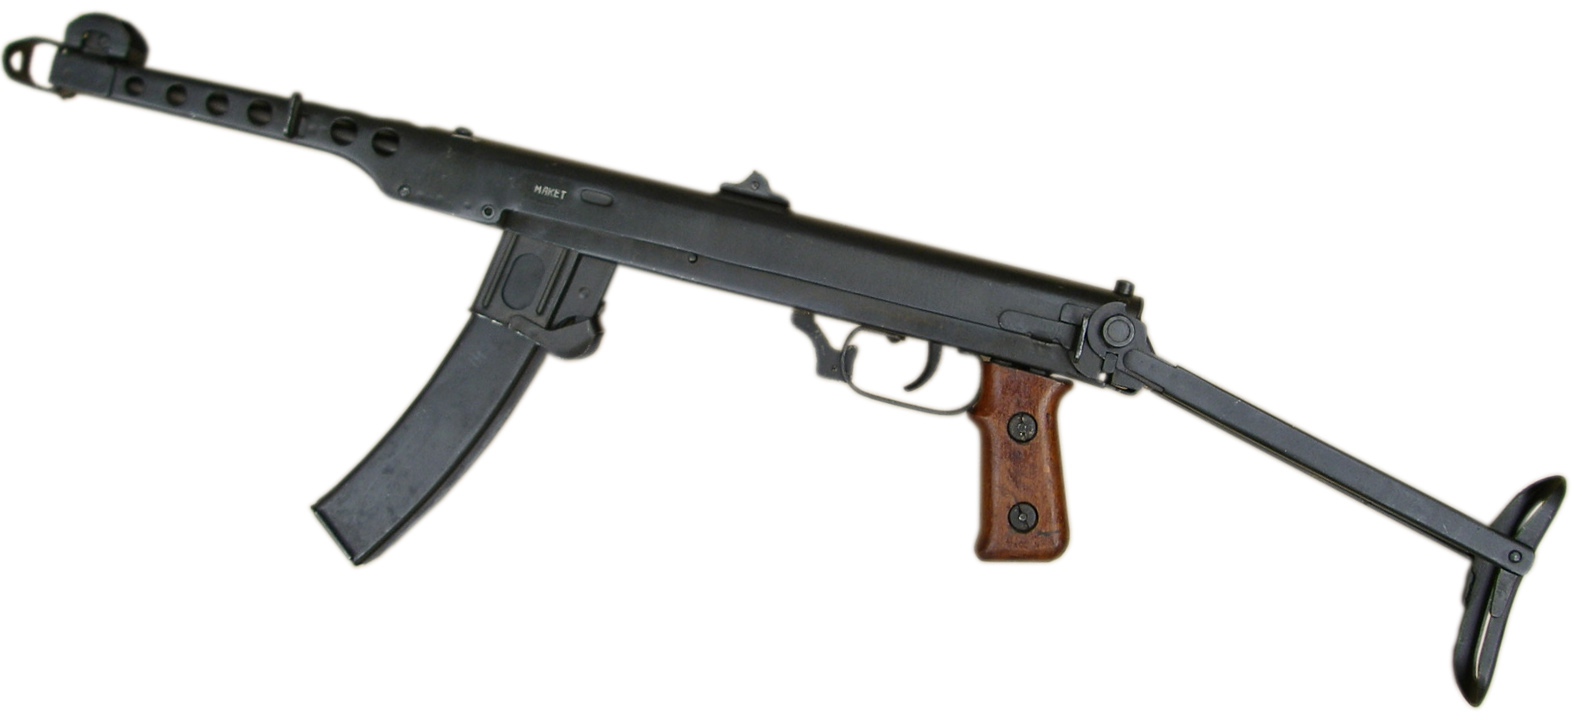 Файлы ППС-43 — пистолет-пулемёт Судаева образца 1943 г.